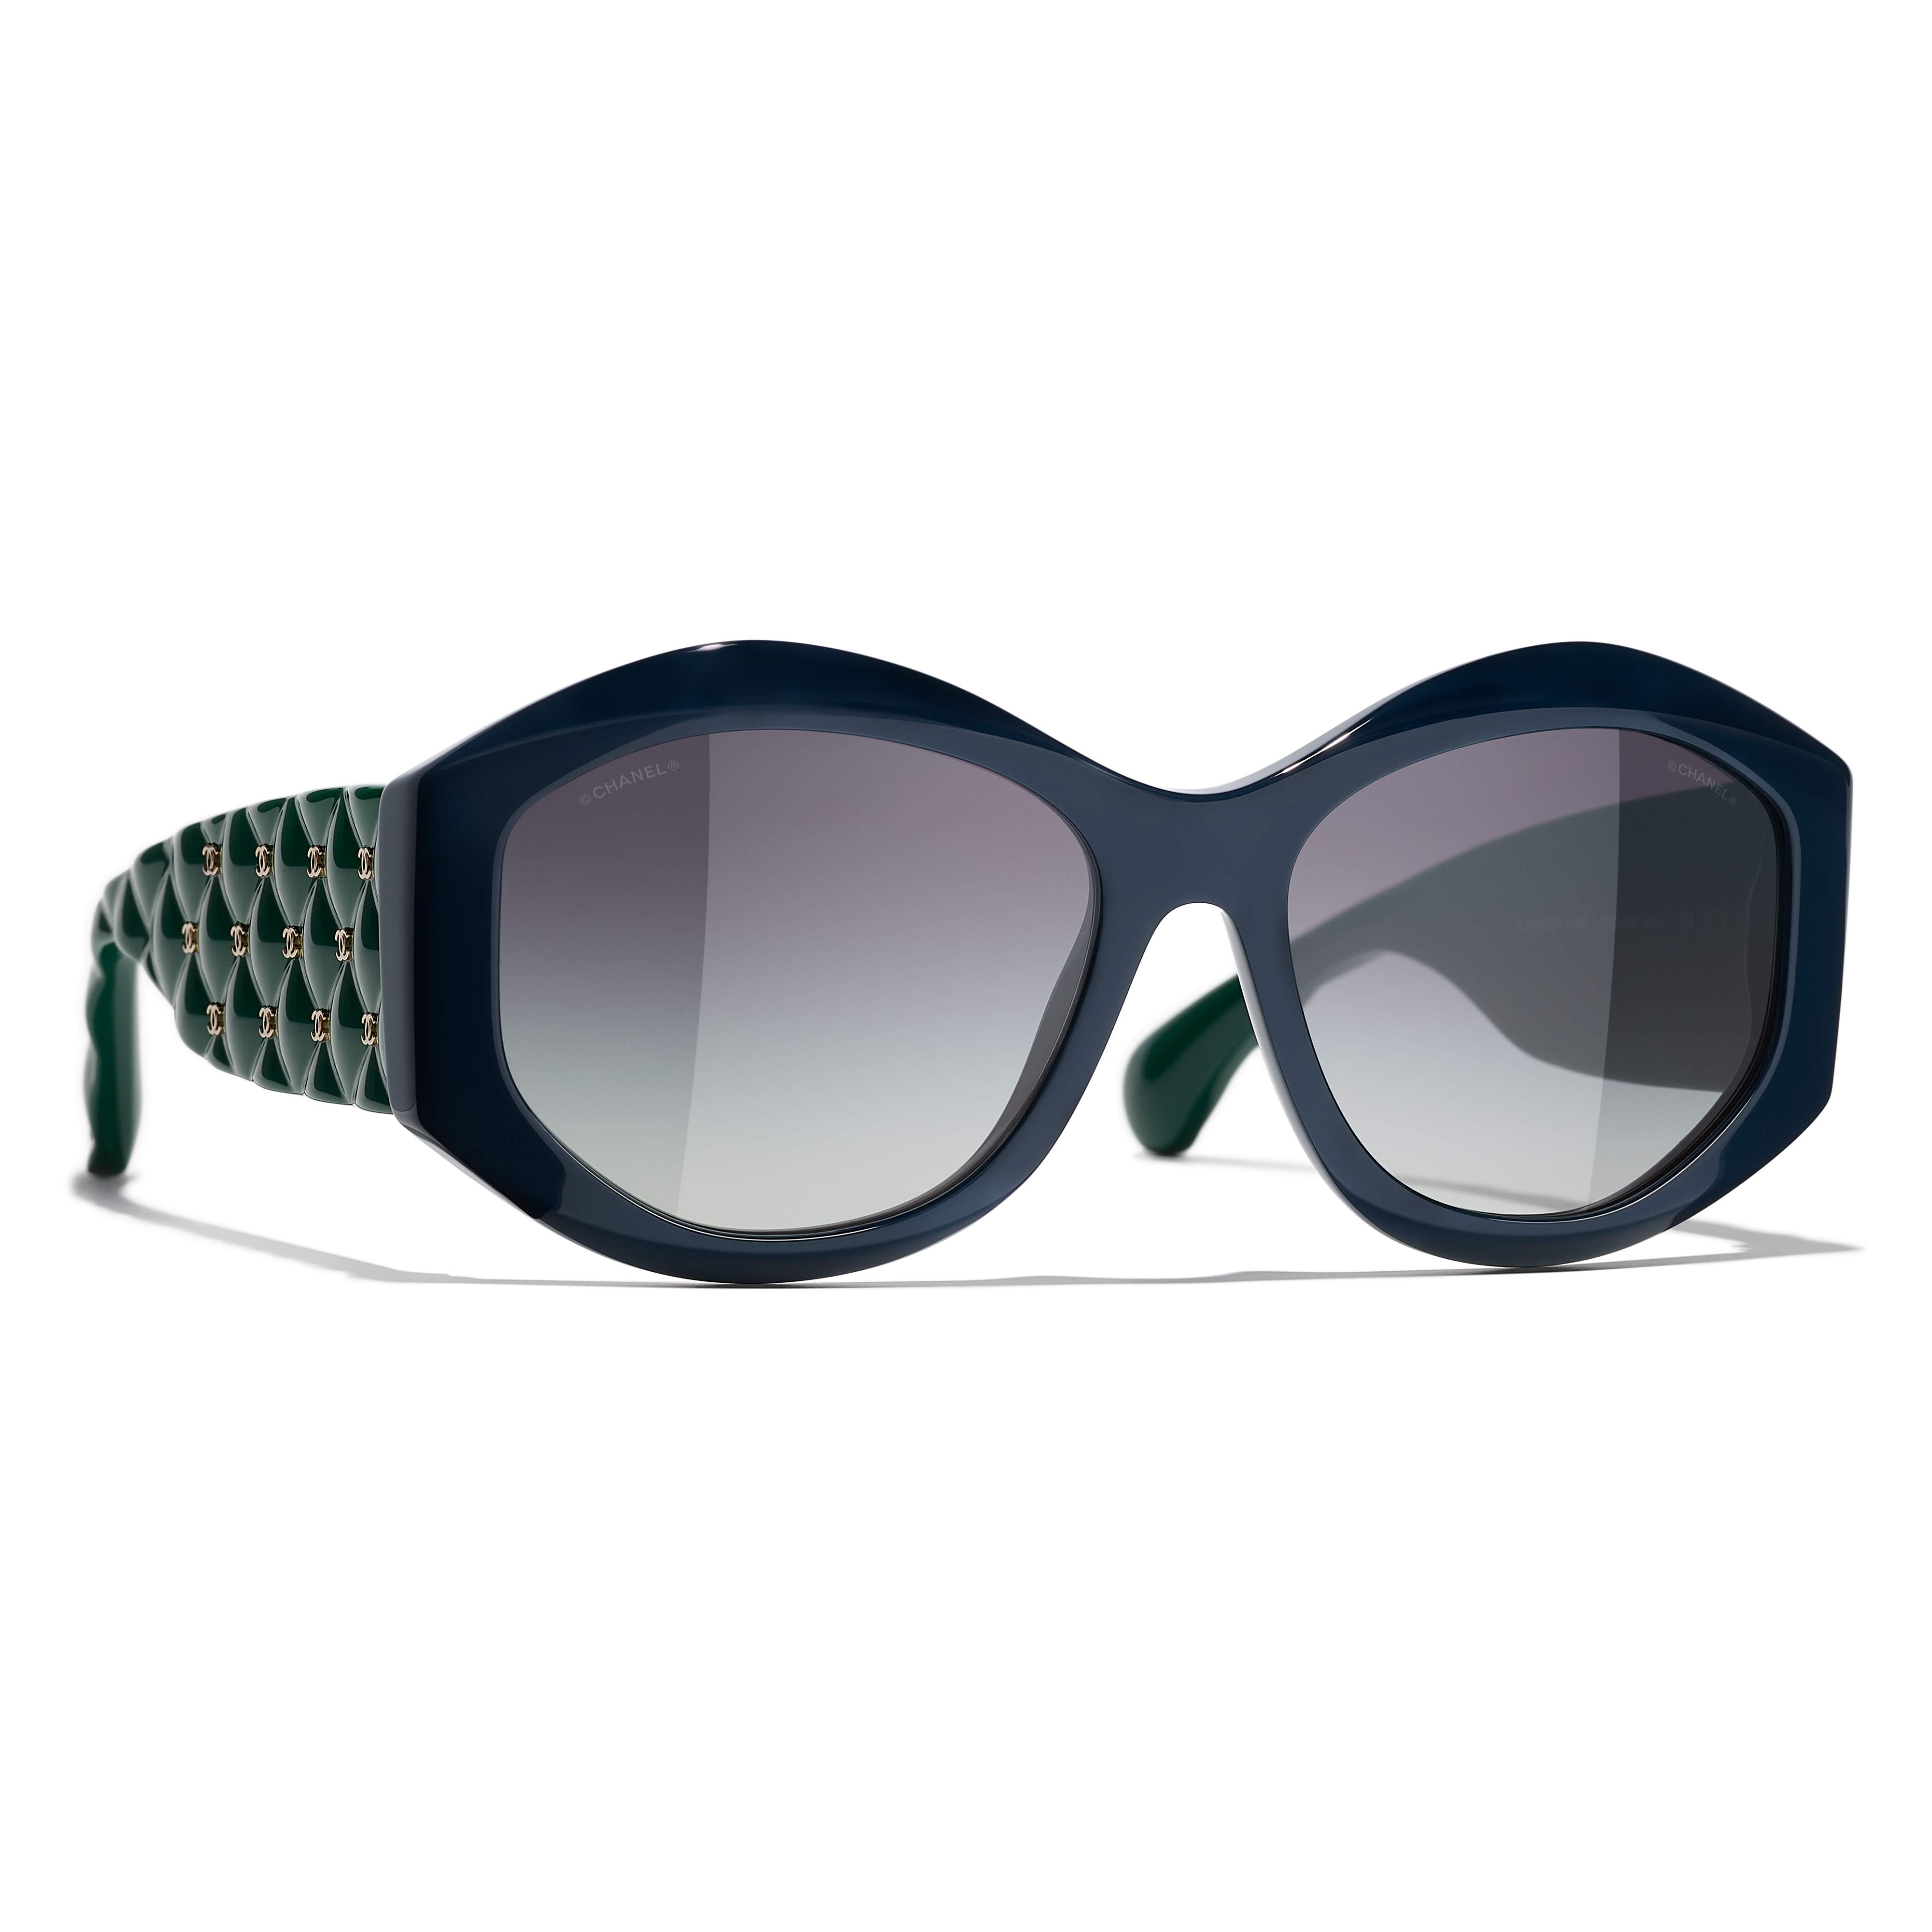 Sunglasses CHANEL CH5486 1659/S6 56-17 Blue in stock | Price 325 